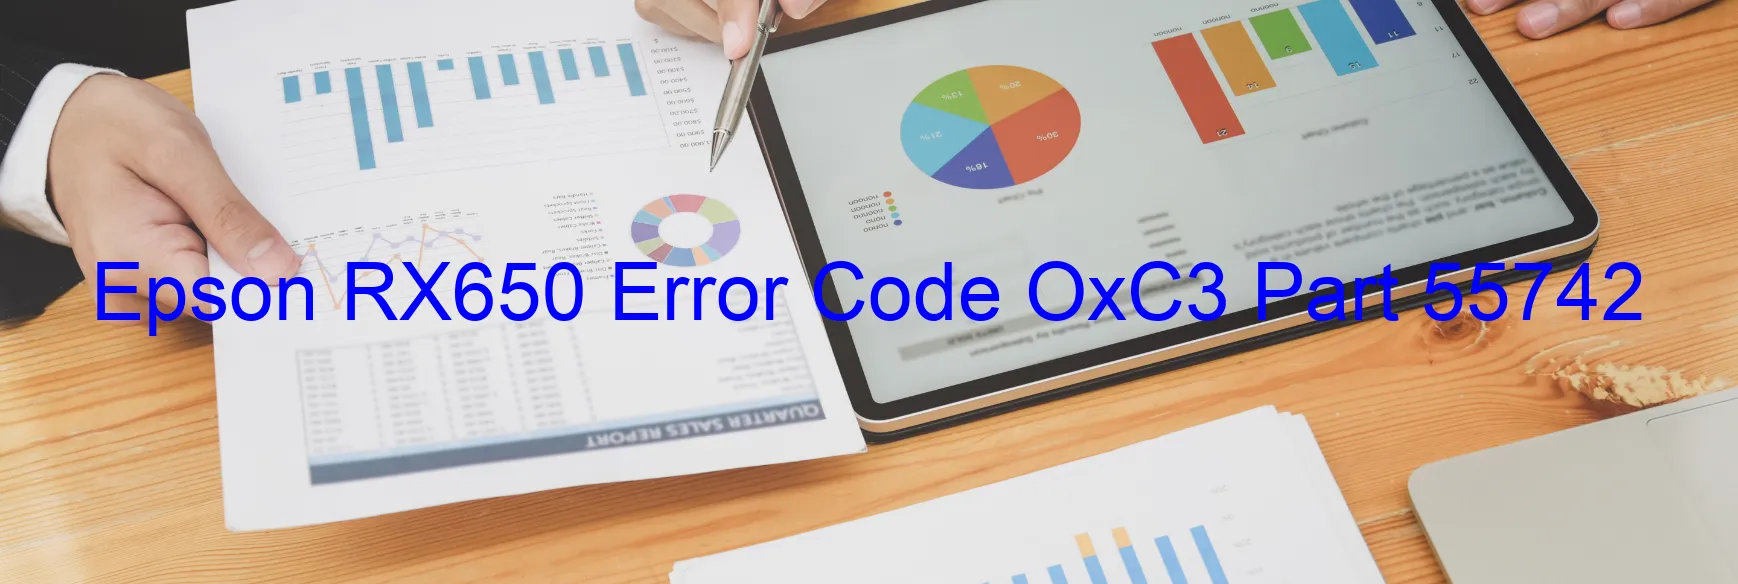 Epson RX650 Error Code OxC3 Part 55742